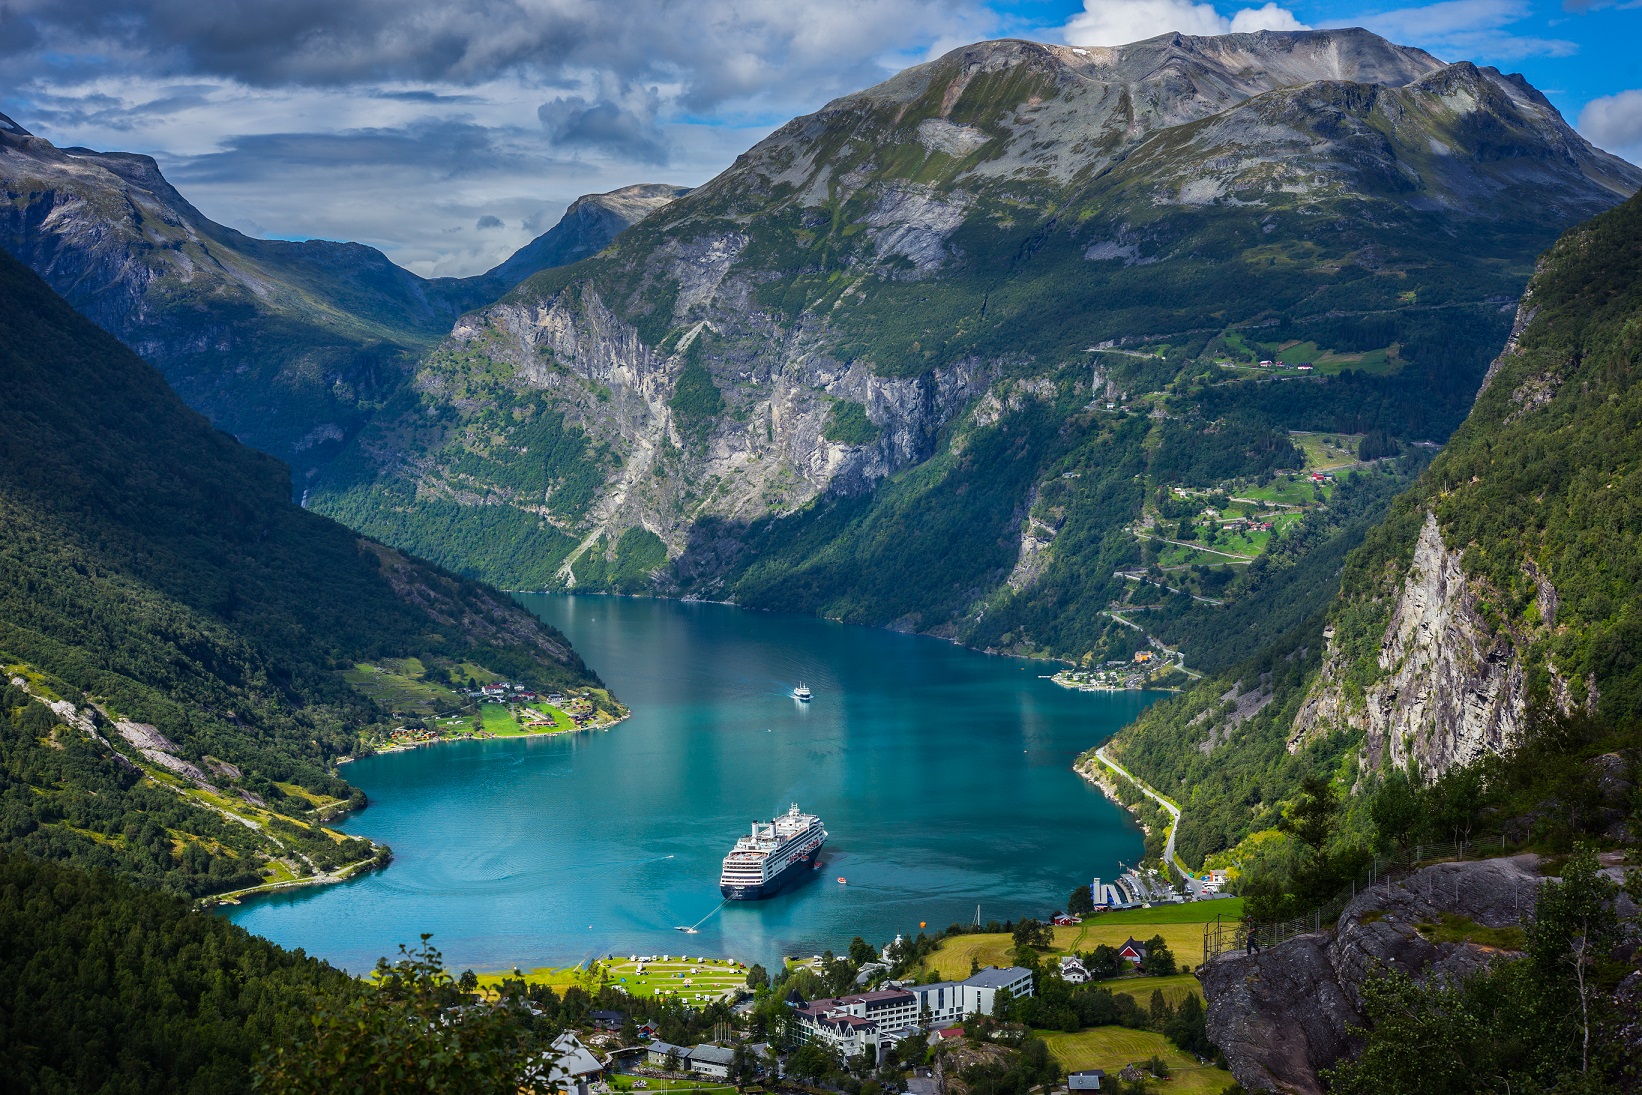 Cruise ship in Norwegian fjord